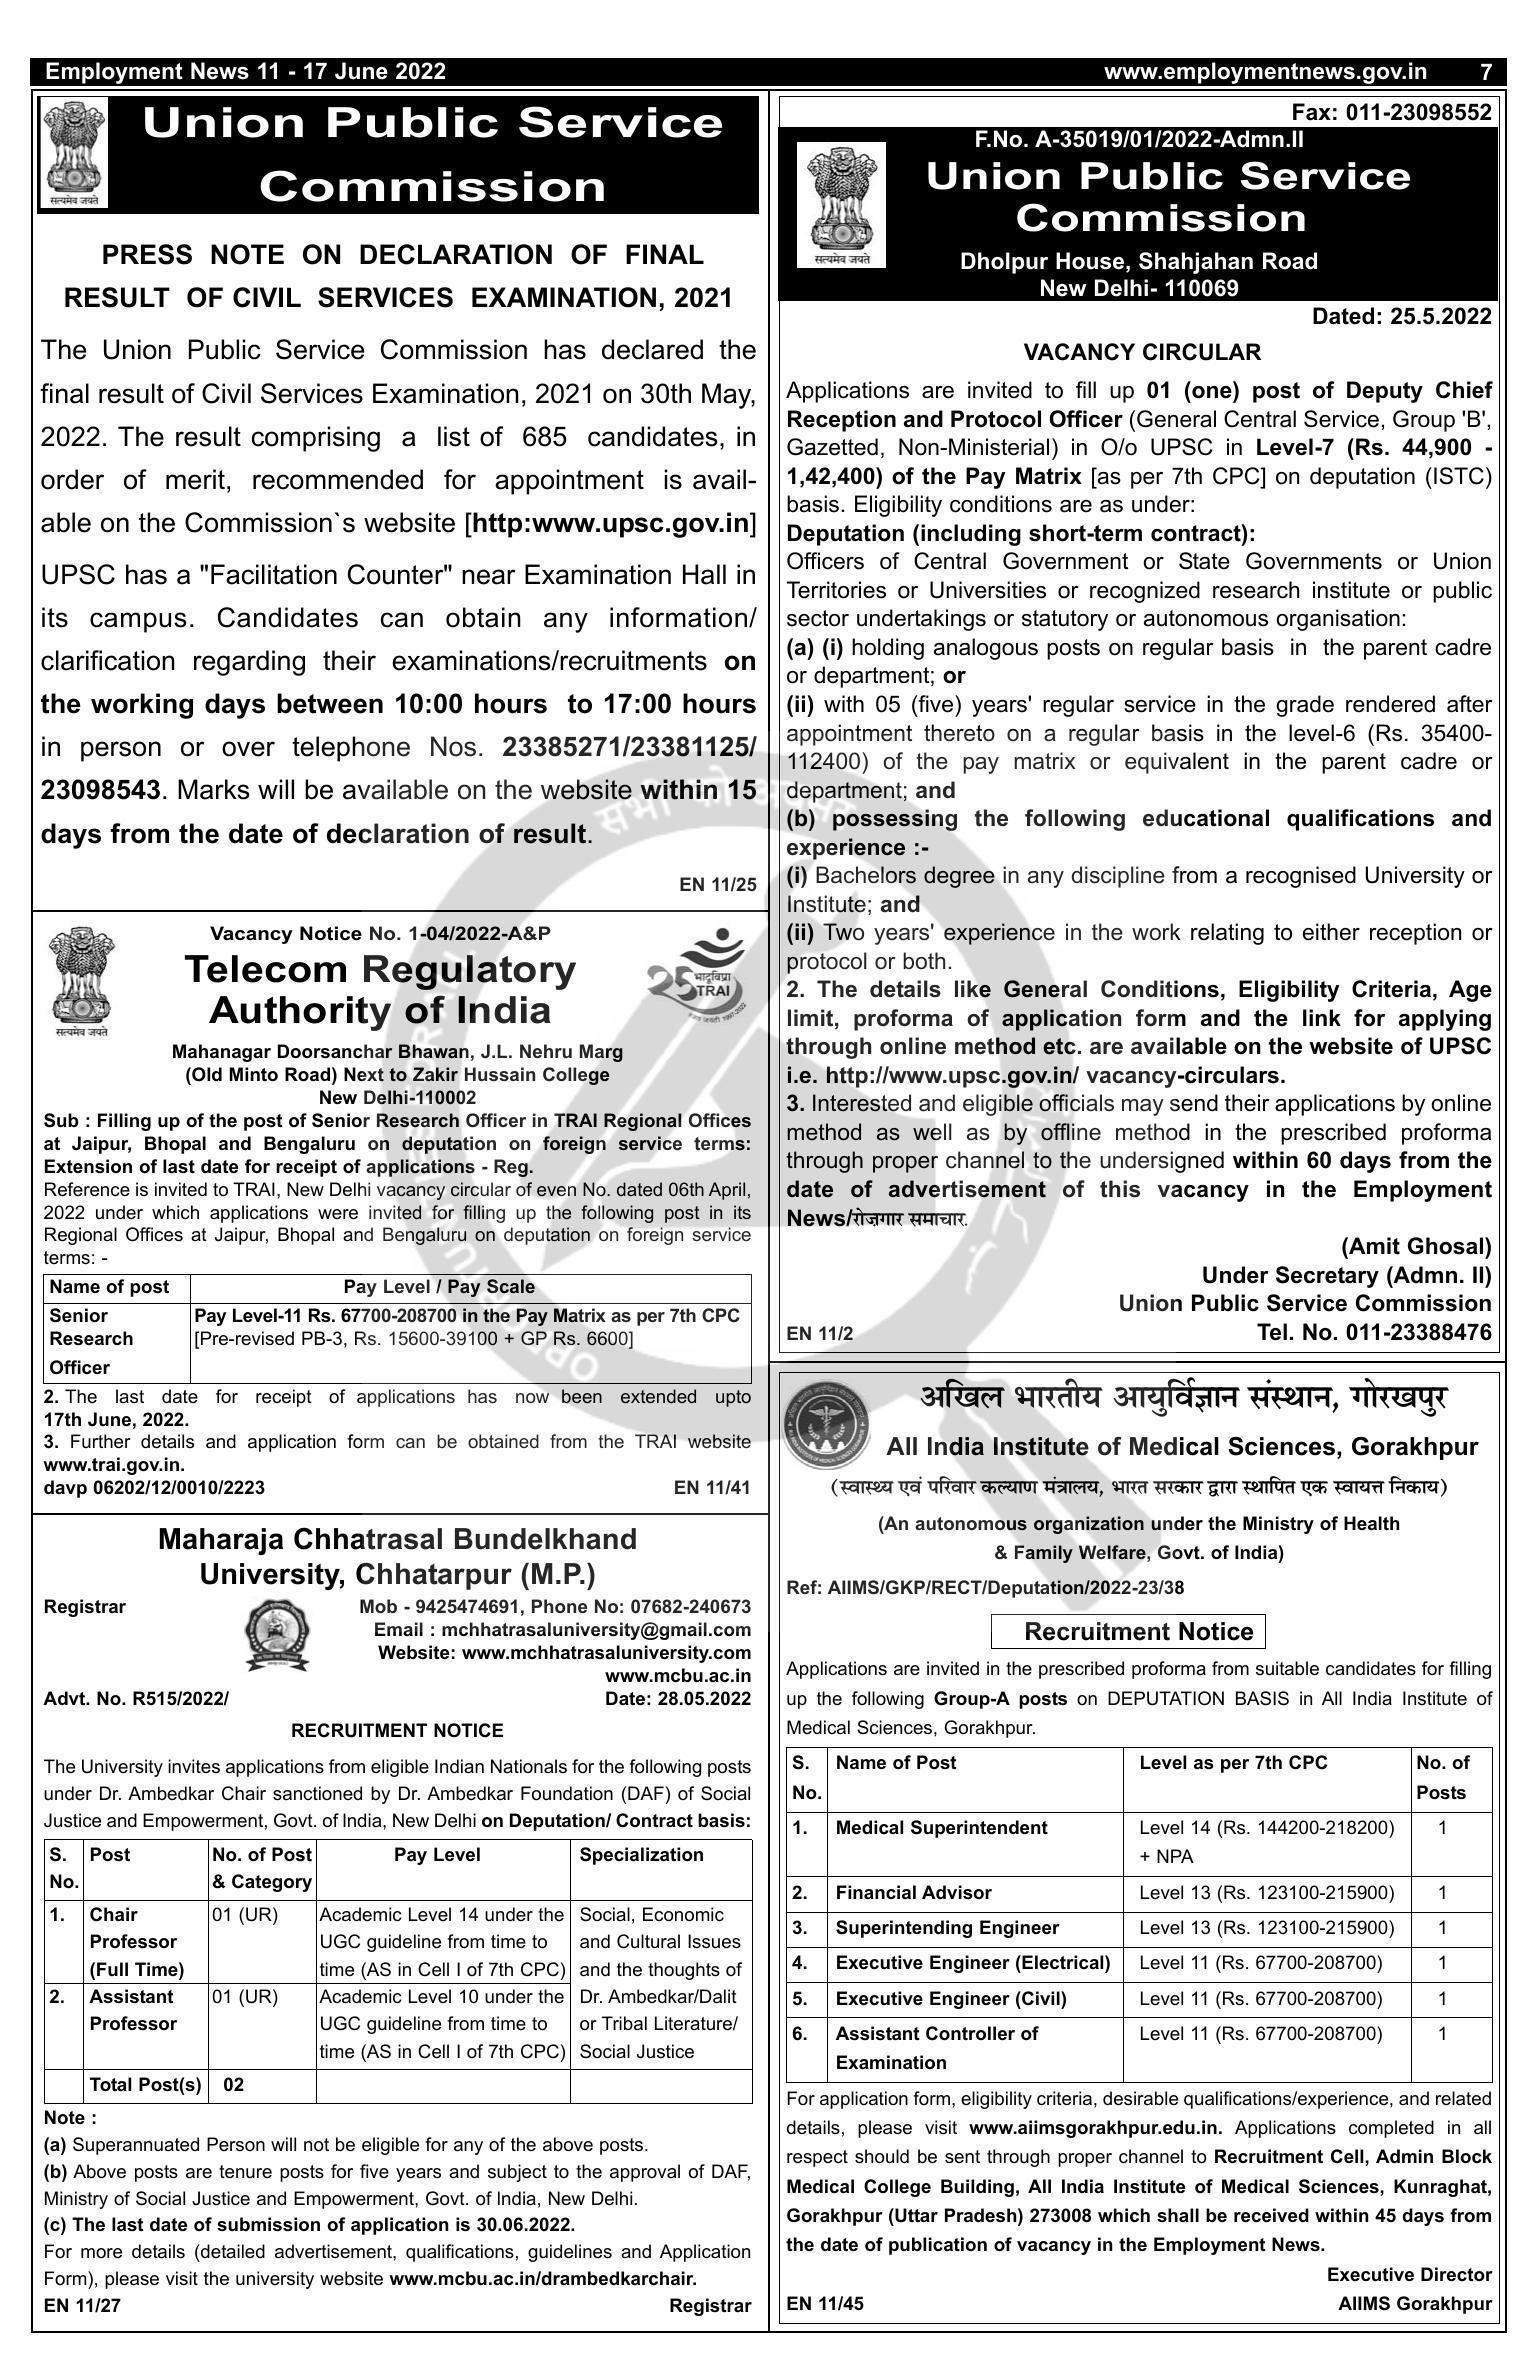 Maharaja Chhatrasal Bundelkhand University (MCBU) Recruitment 2022 - Page 1